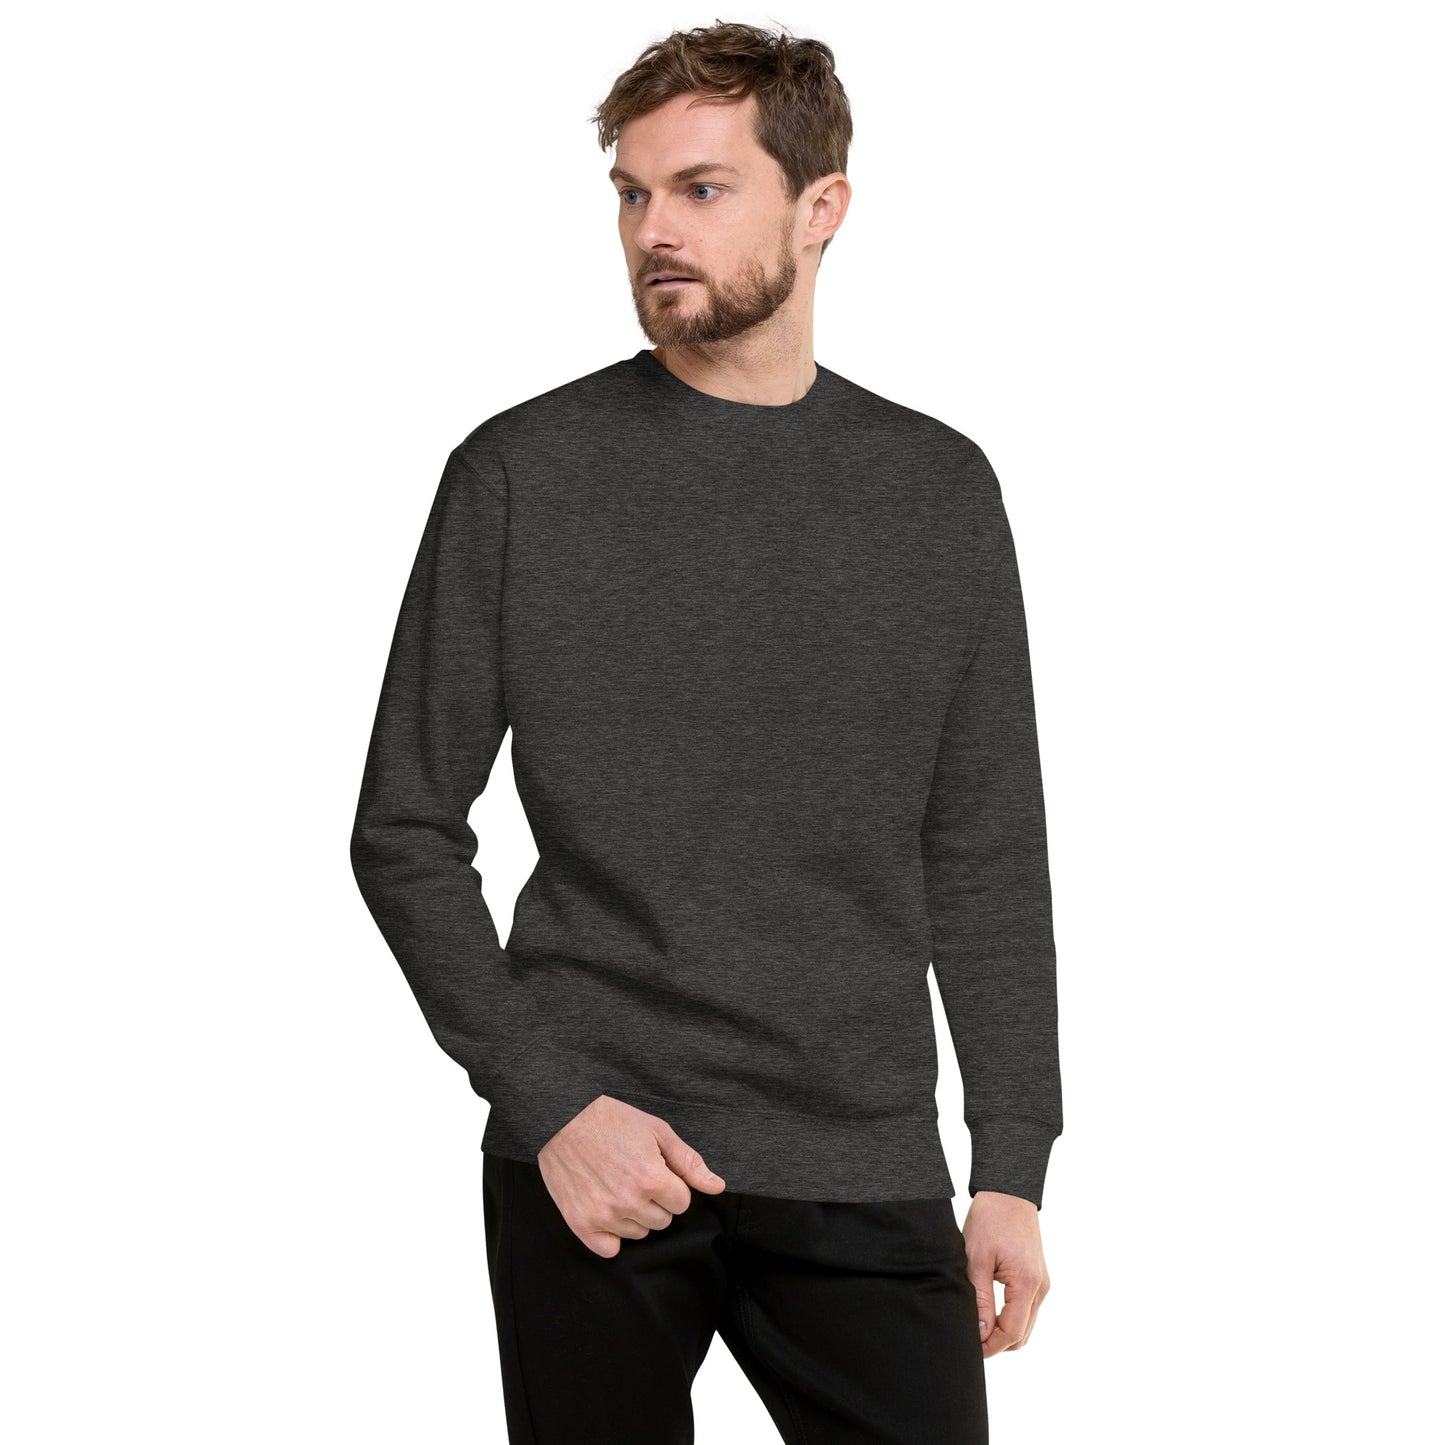 Greenleyland Attire - Keep Life Simple - Highest Quality Unisex Premium Sweatshirt